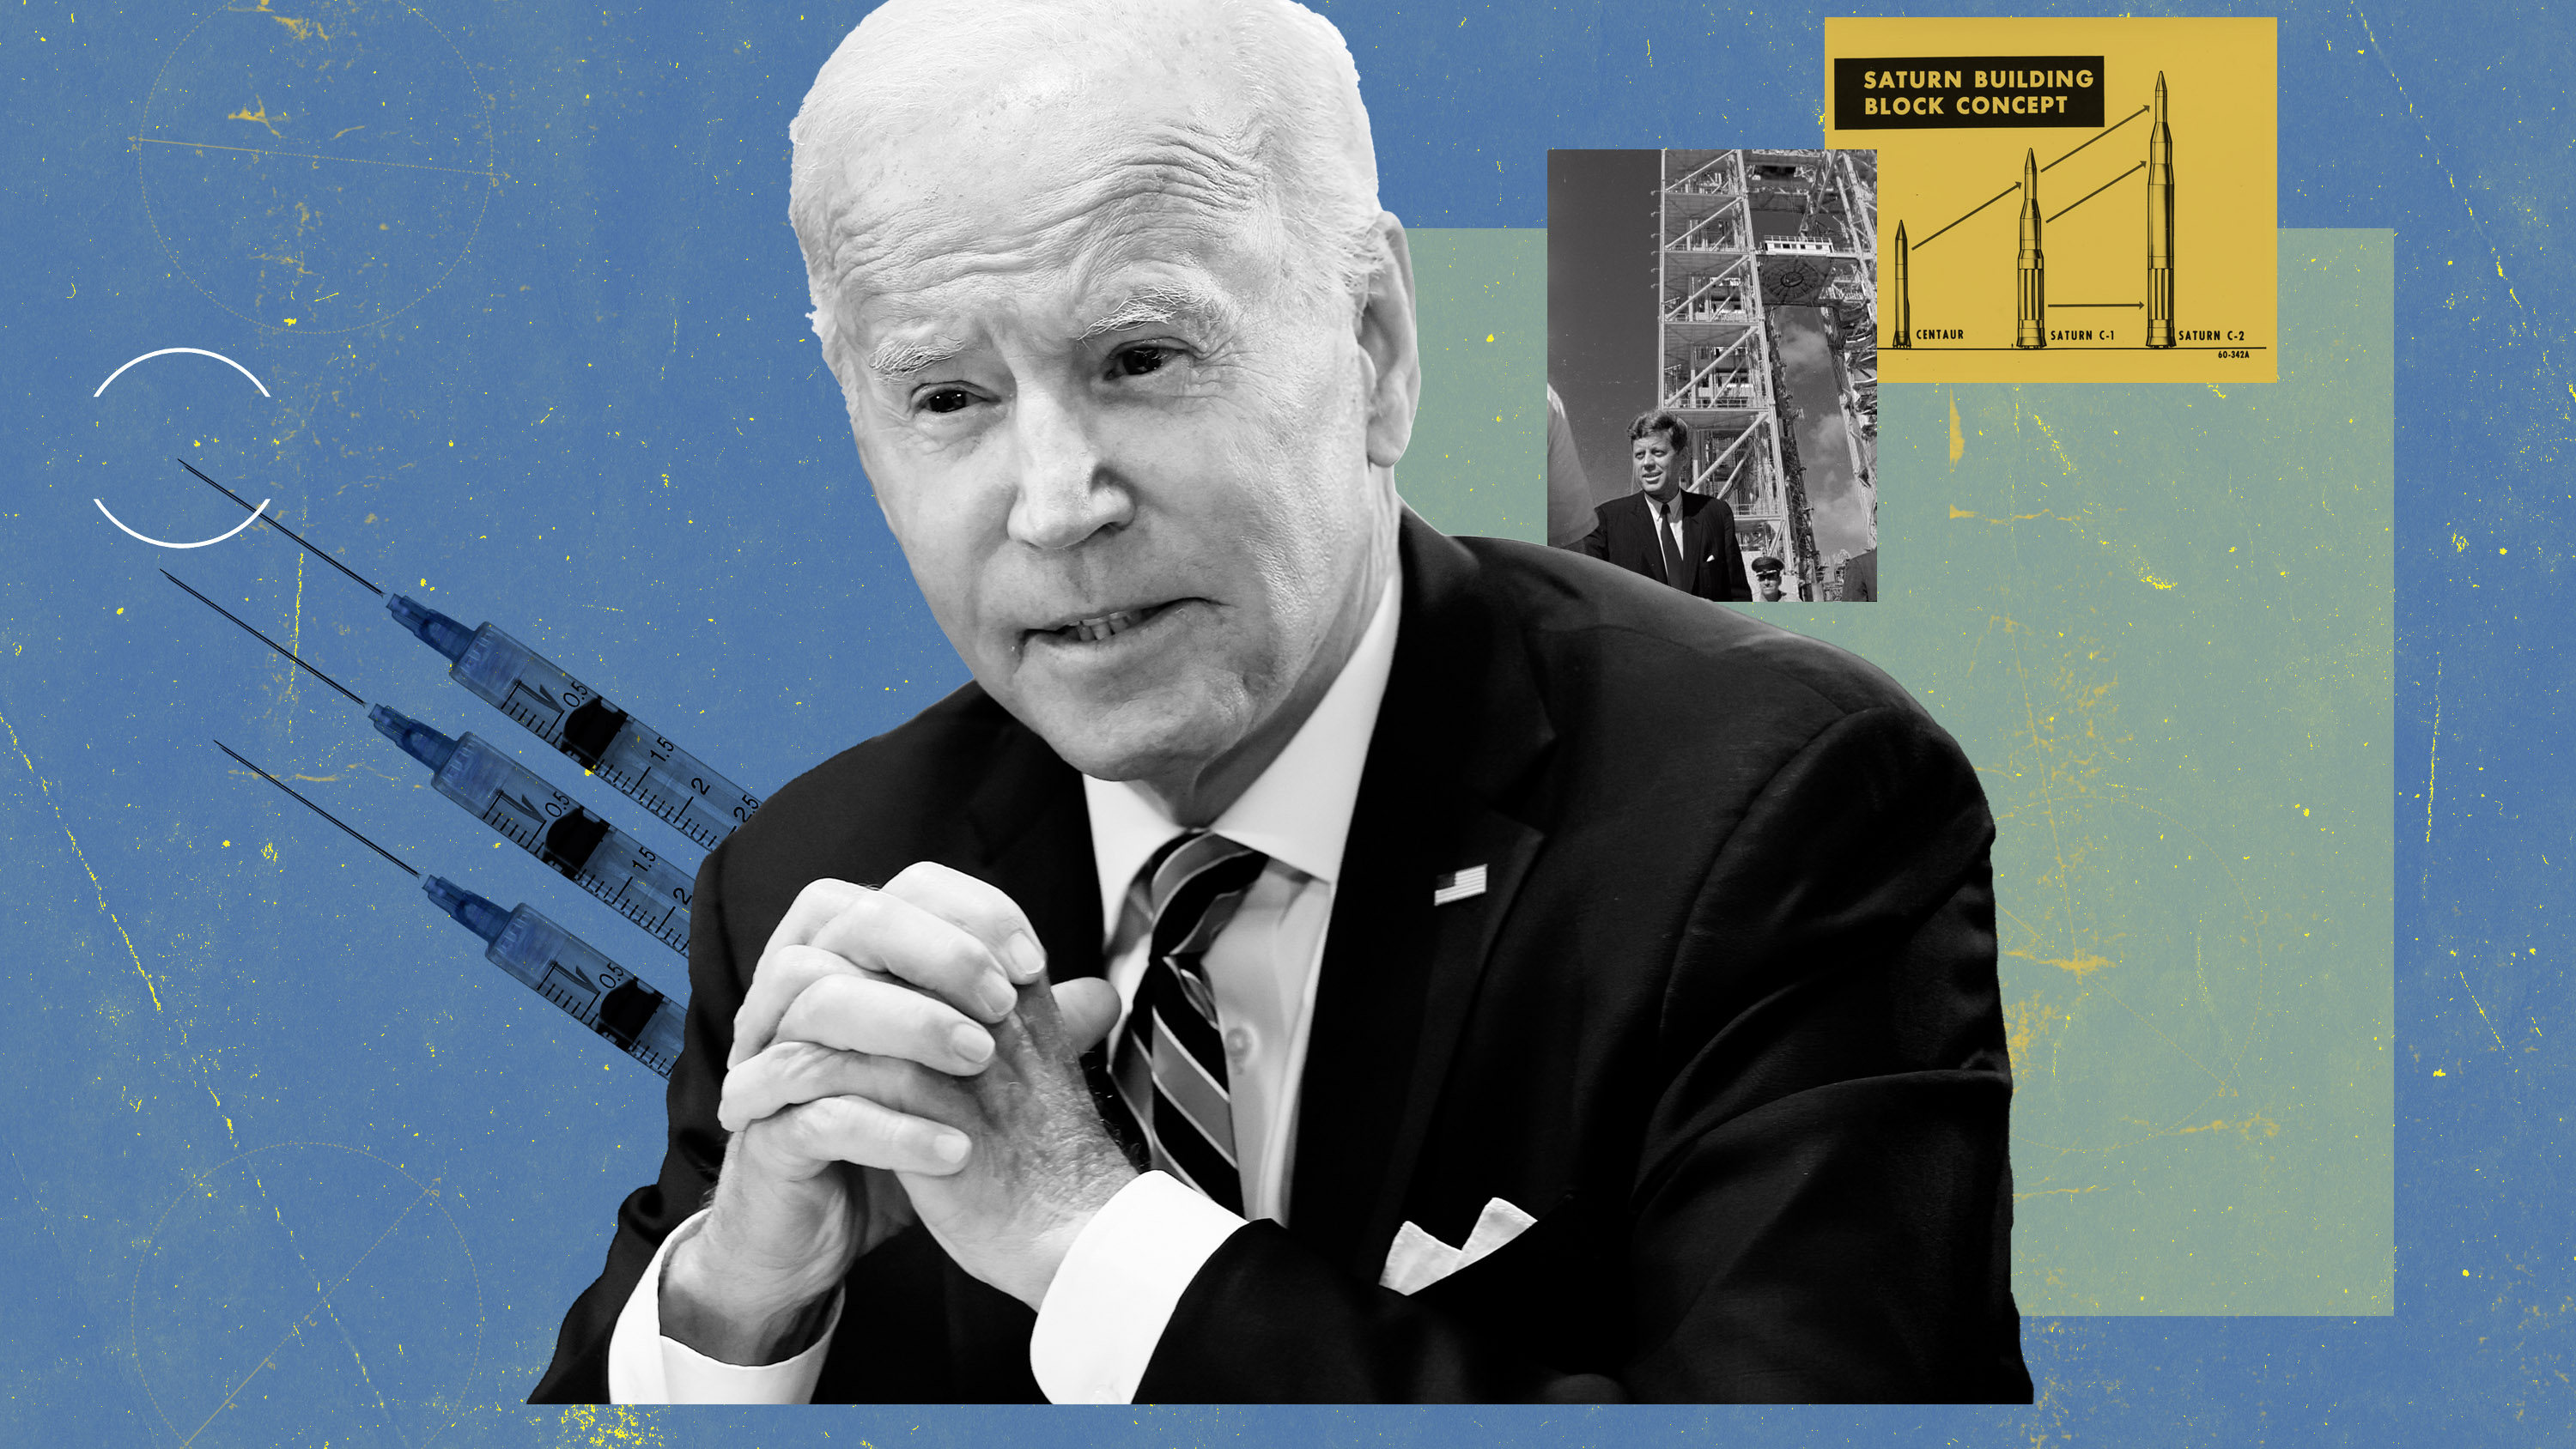 Biden announces Cancer &quot;Moonshot&quot; project at JFK Library